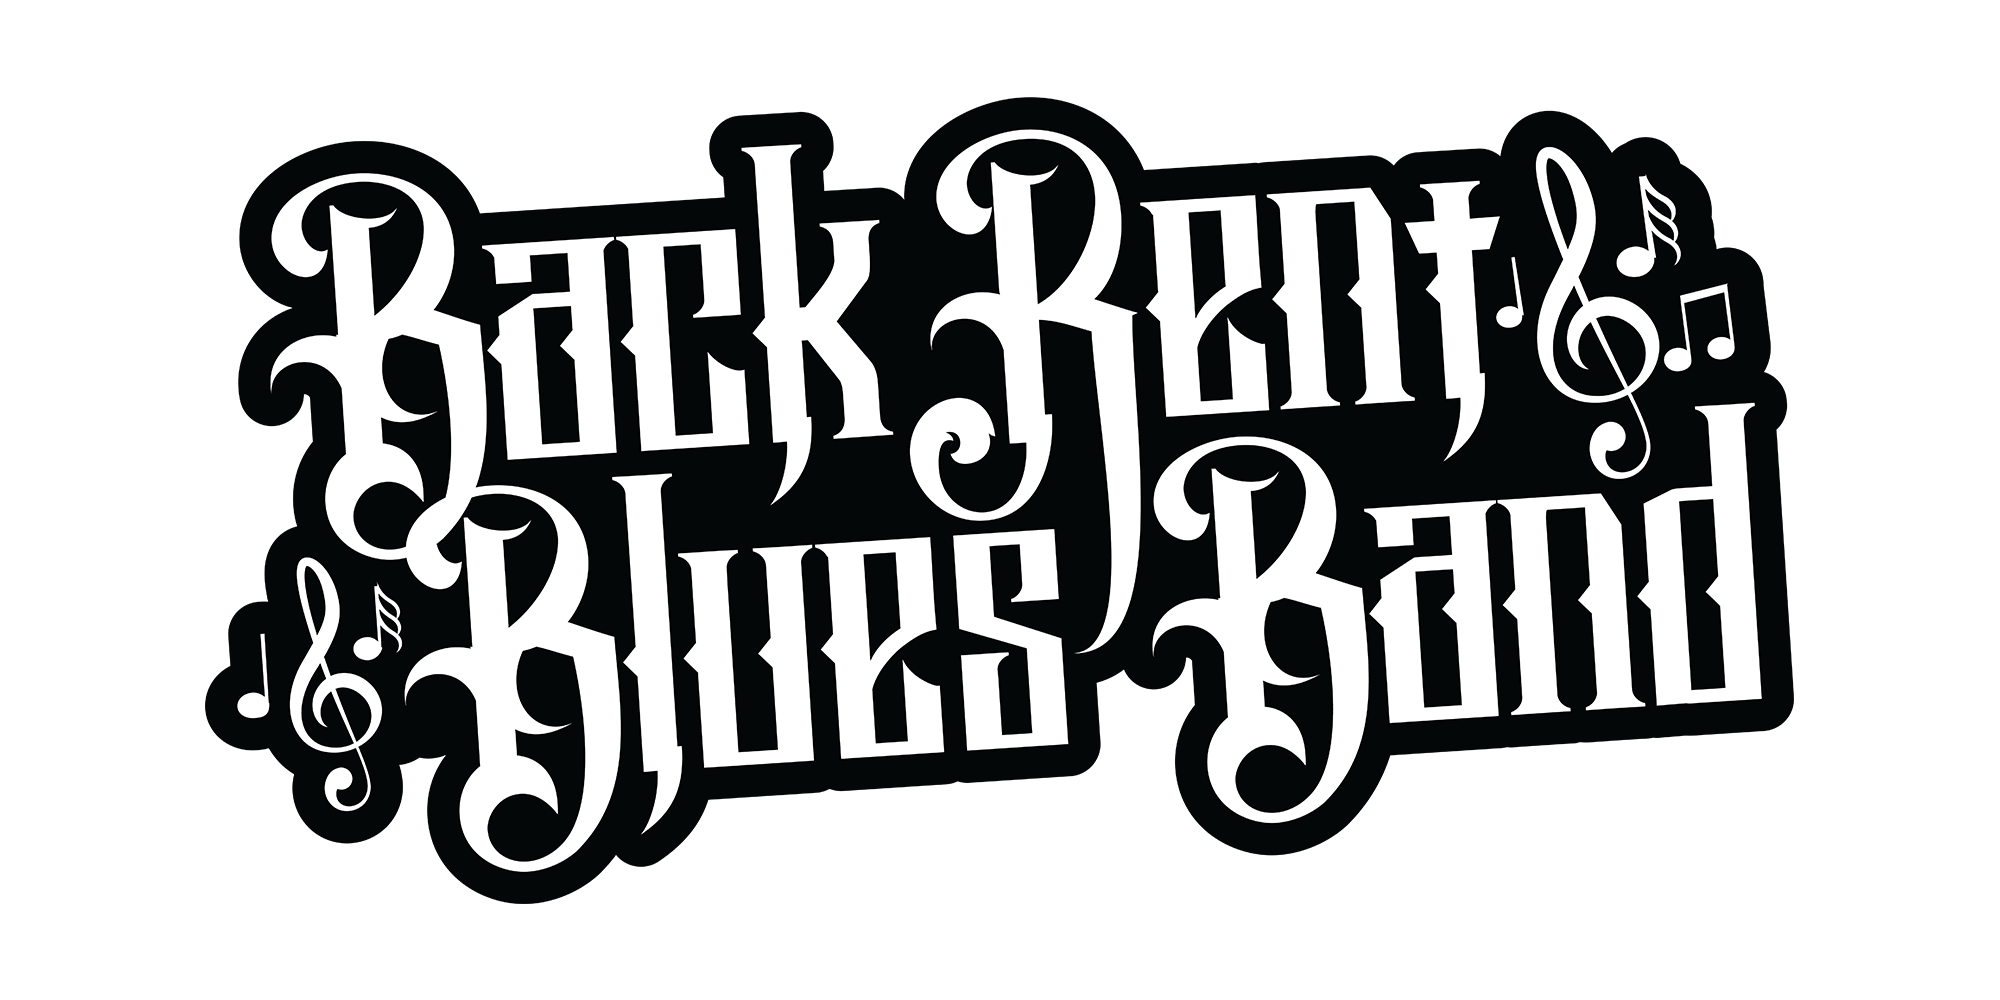 Blues Band Logo - Back Rent Blues Band